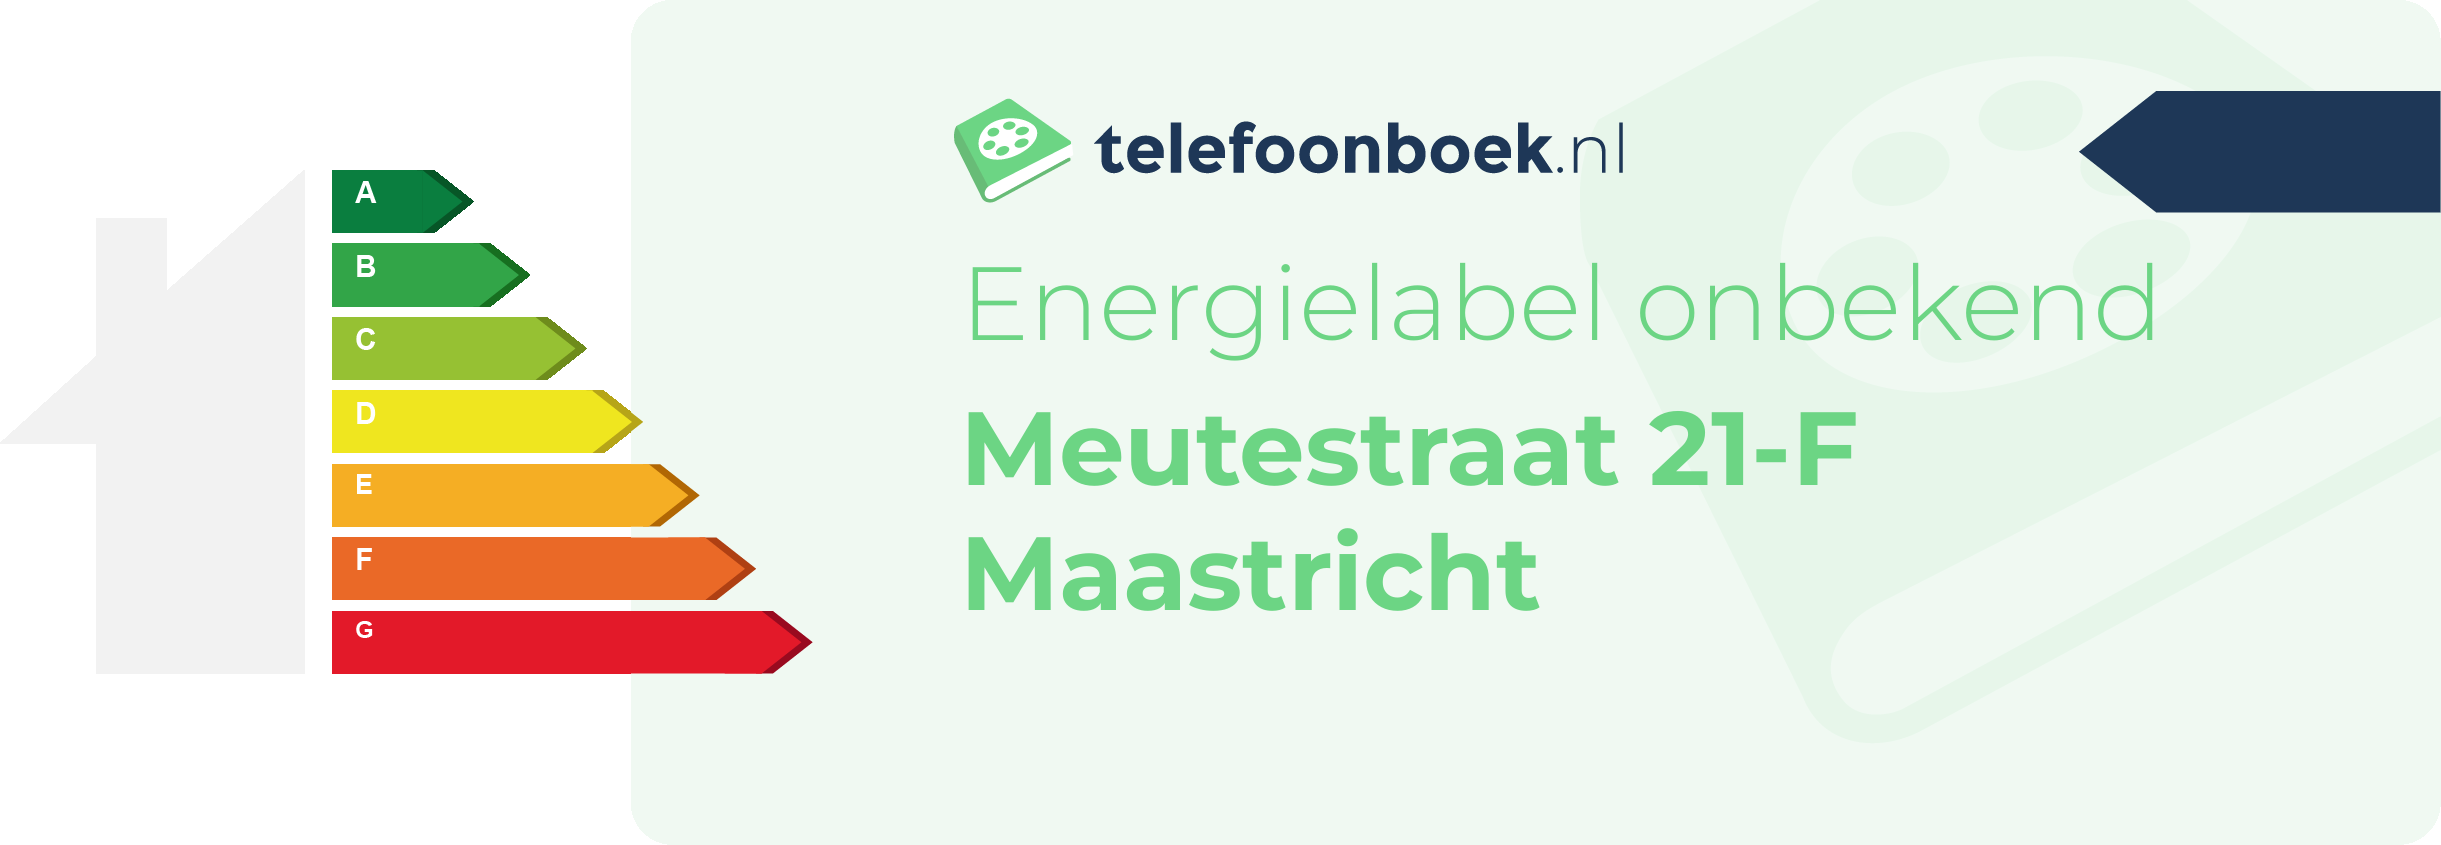 Energielabel Meutestraat 21-F Maastricht